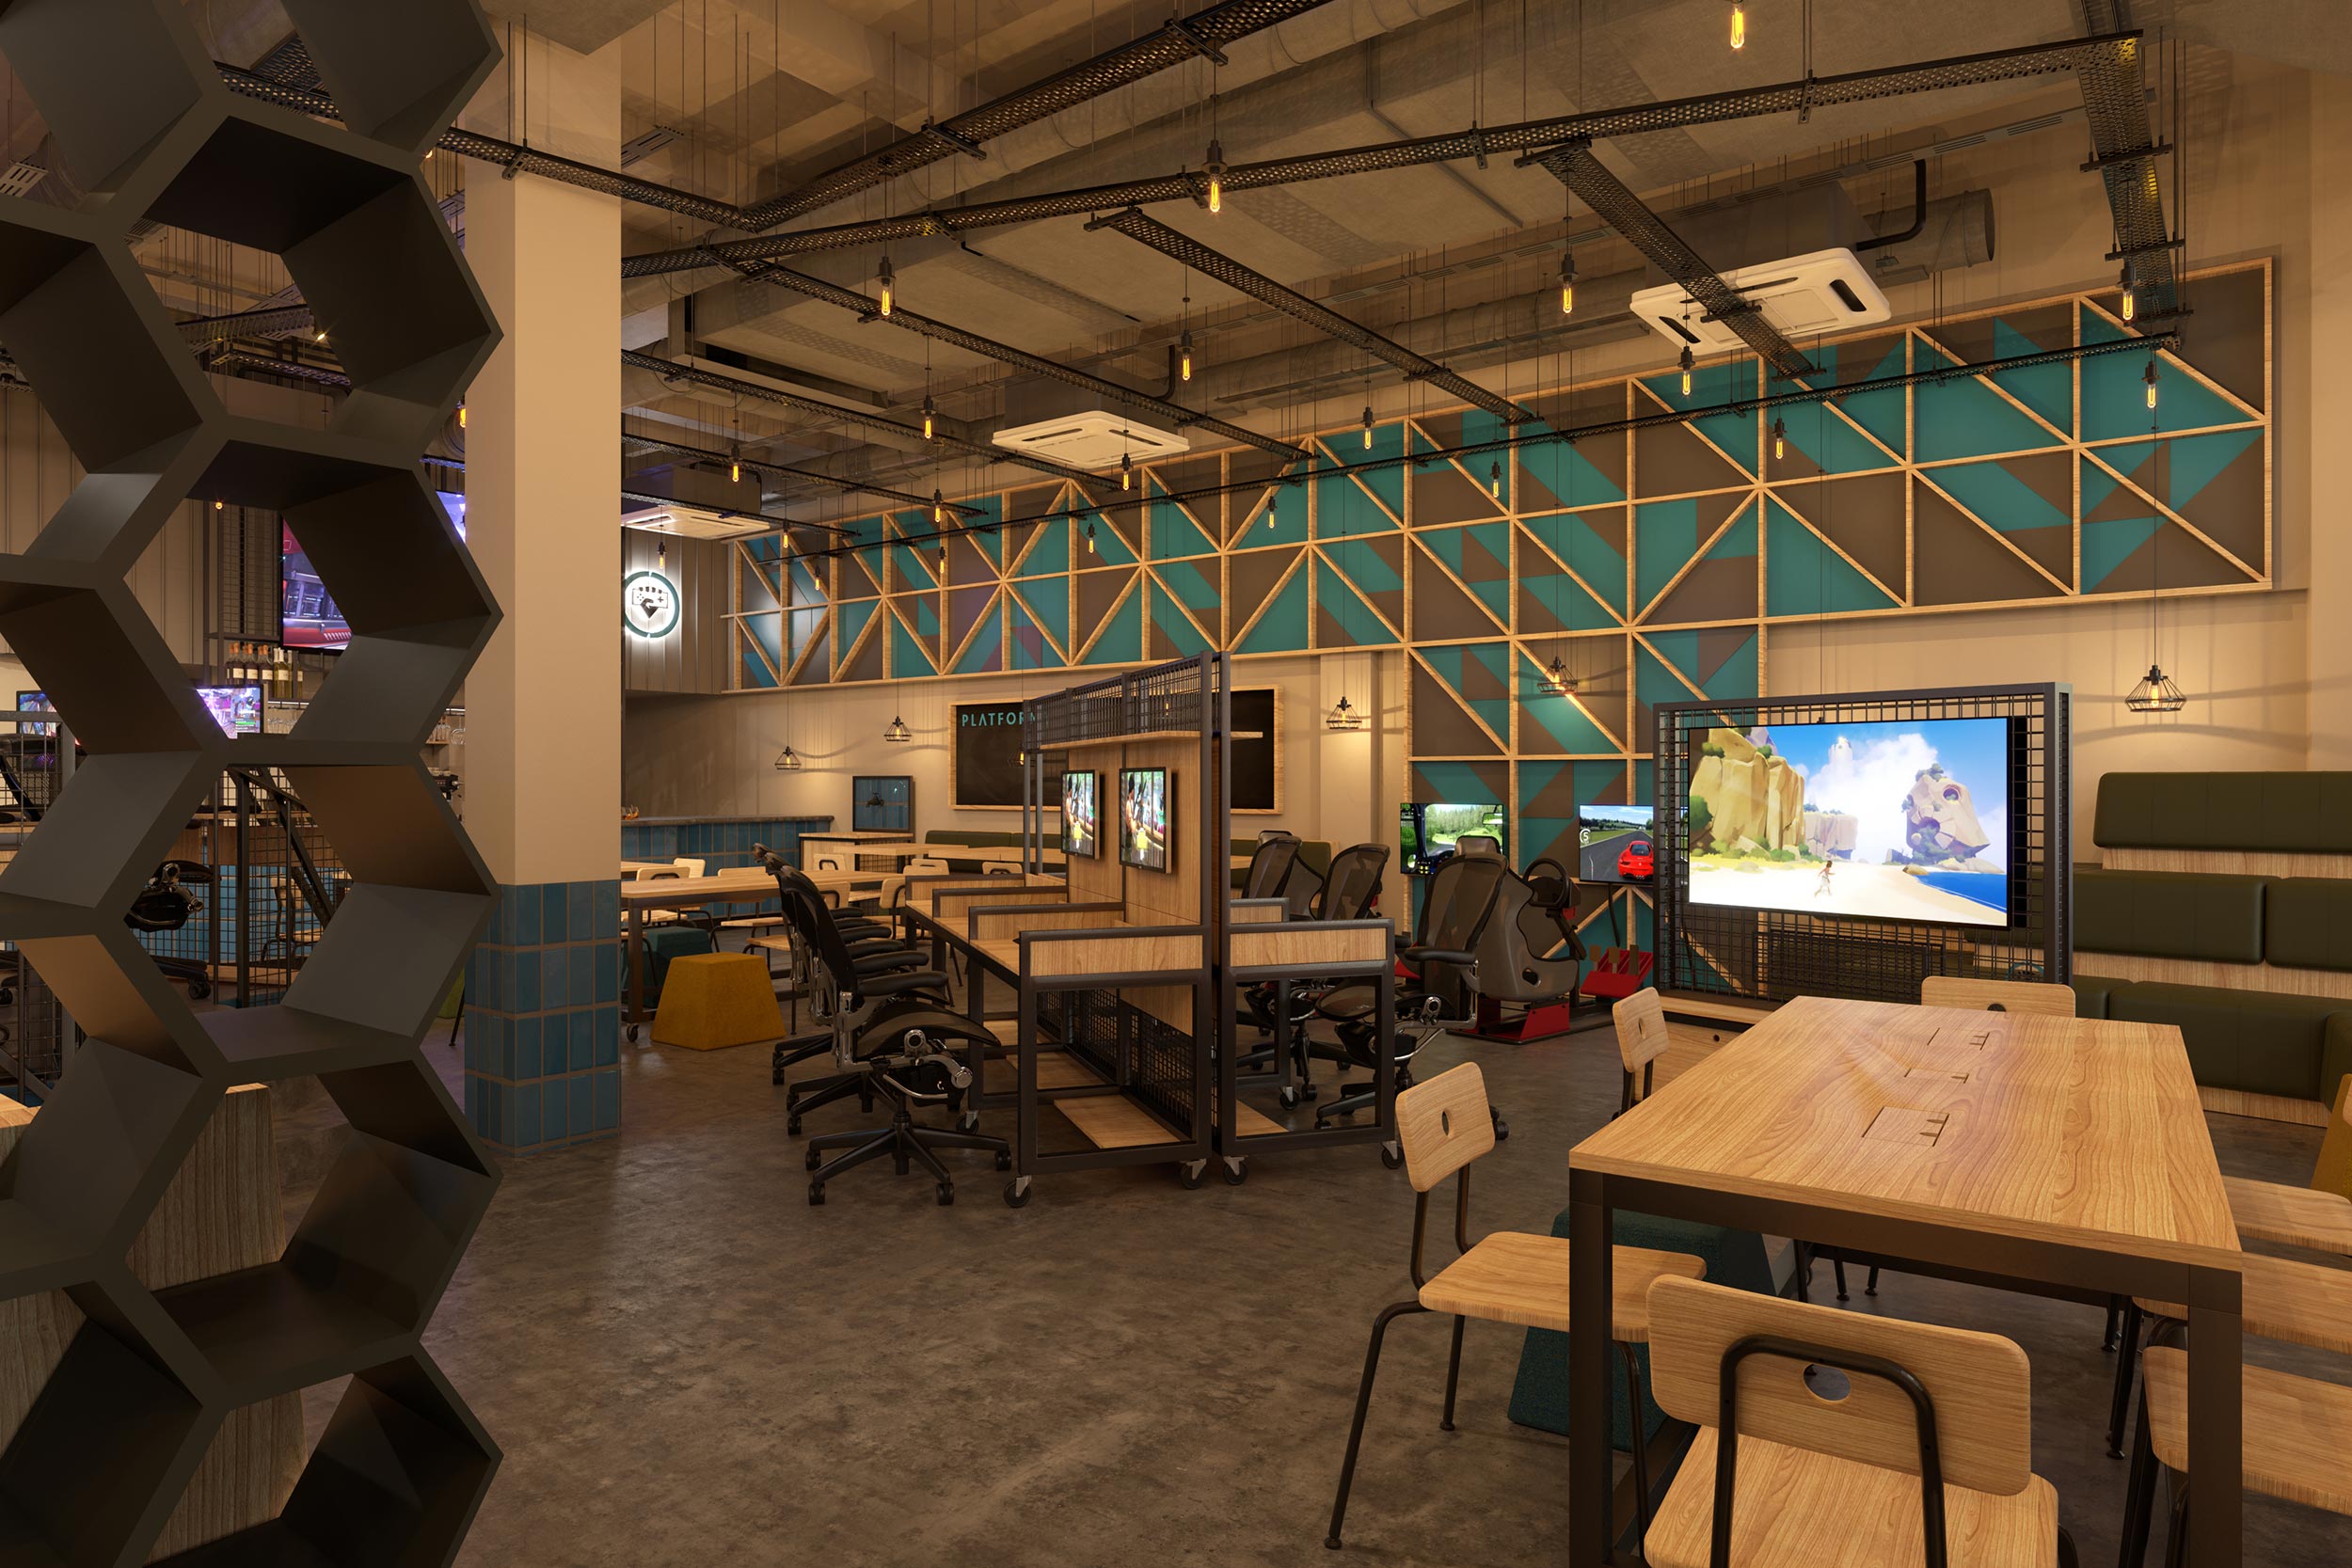 Platform Gaming Bar, Shoreditch Commercial Retail Interior Design Visuals by Unit4 Studio, London